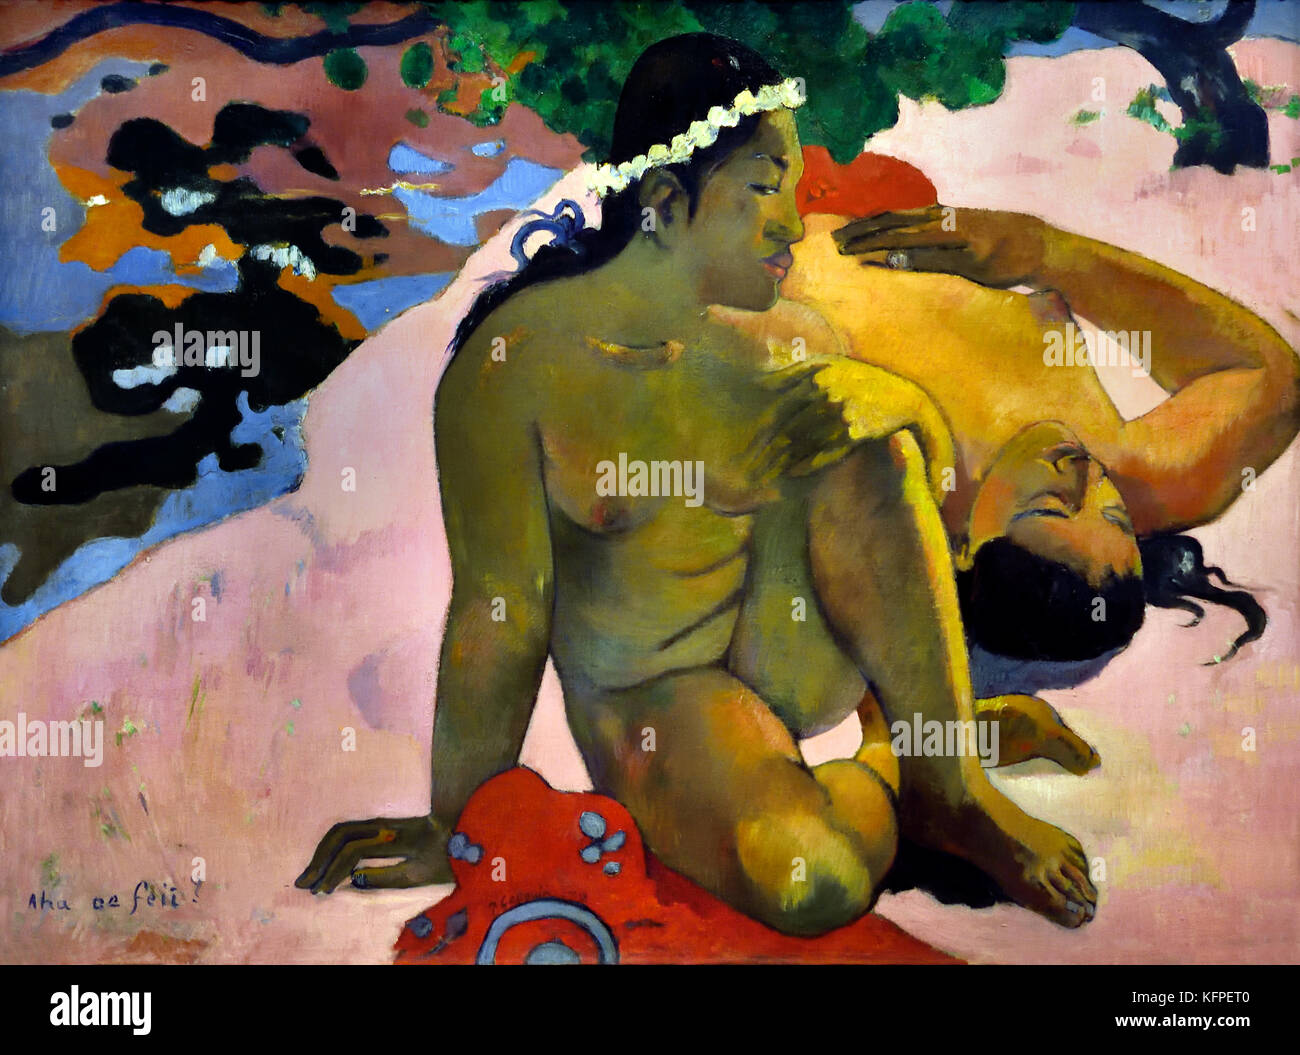 Ahaoe Feii (Eh Quaoi! Tu es Jalouse?) Ehi, che cosa sono voi Jalouse 1892 Paul Gauguin - Eugène Henri Paul Gauguin 1848 - 1903 era un francese post-impressionismo artista, Francia. ( Morto 8 maggio 1903, Atuona, Isole Marchesi, Polinesia Francese ) pittore, scultore. Foto Stock